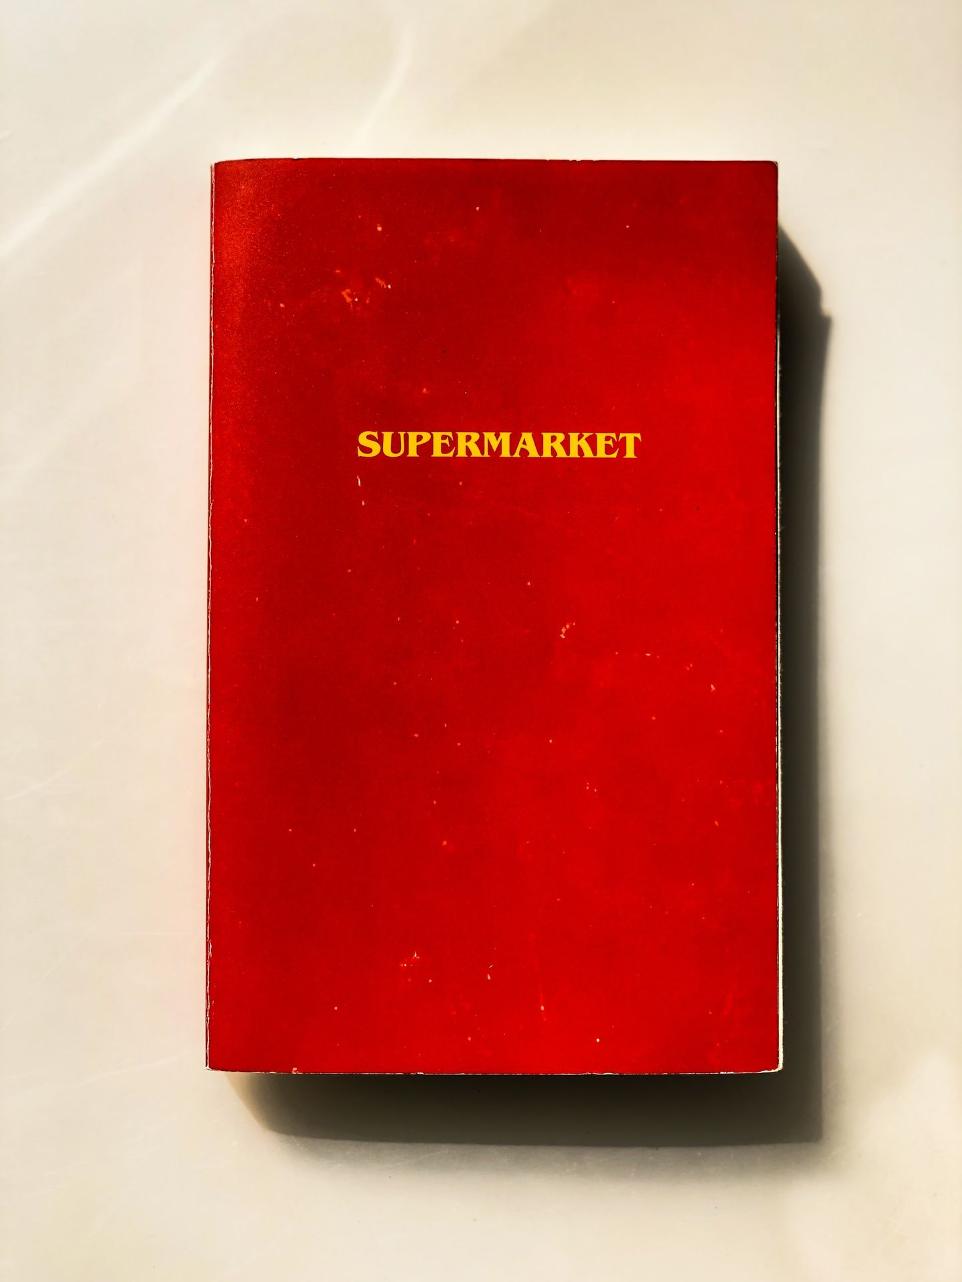 Supermatket book